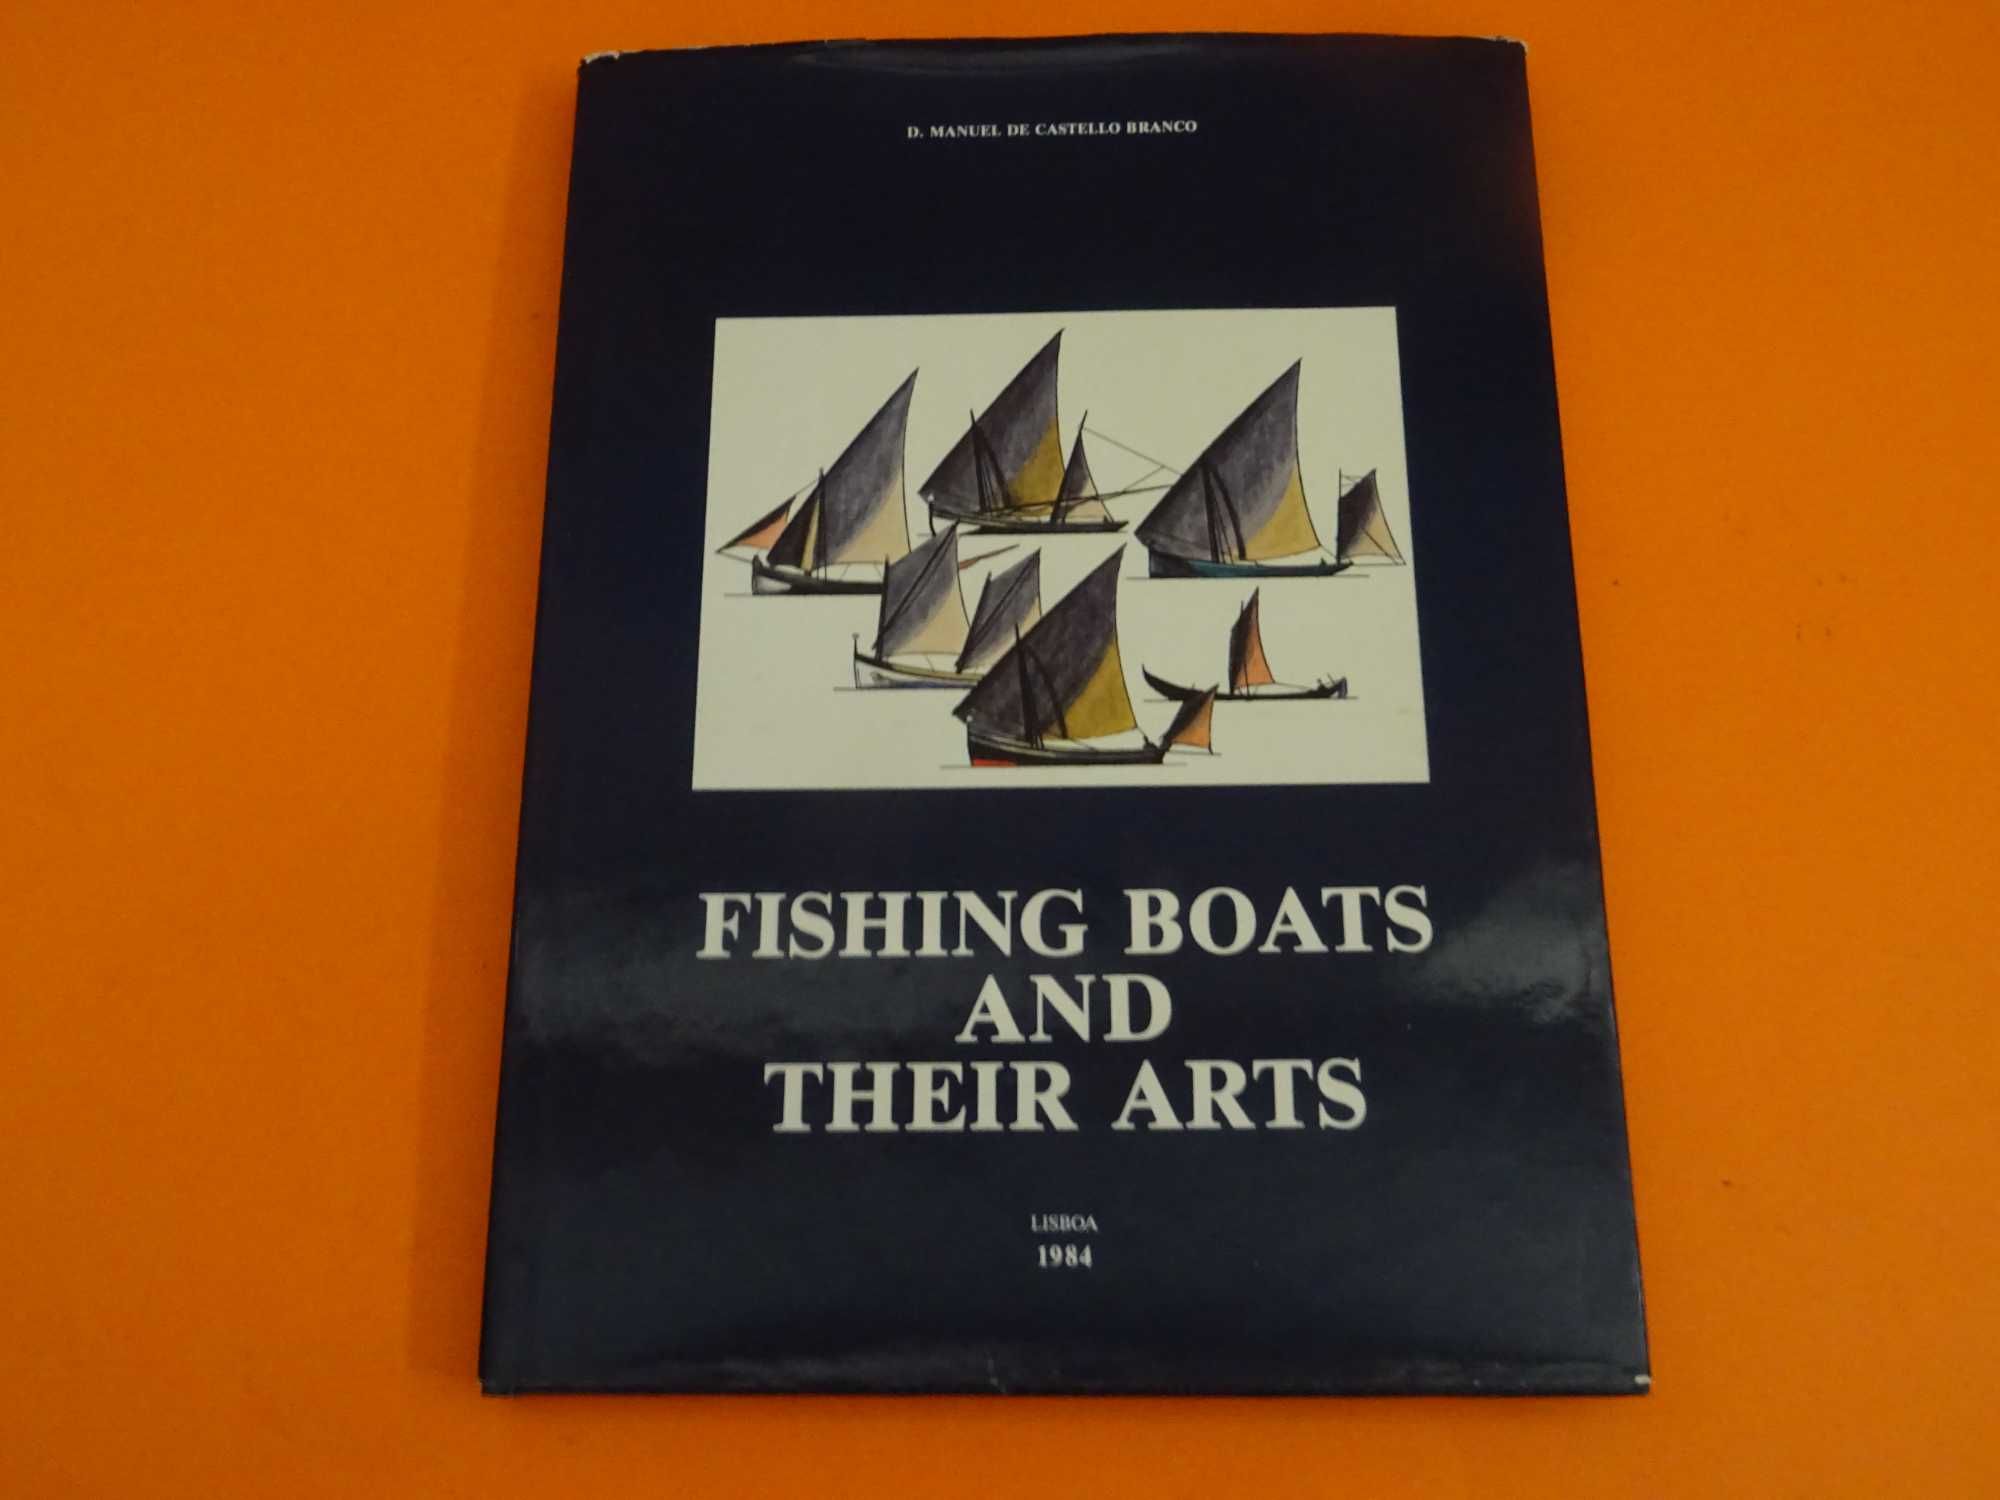 Fishing Boats and their Arts - D. Manuel de Castello Branco